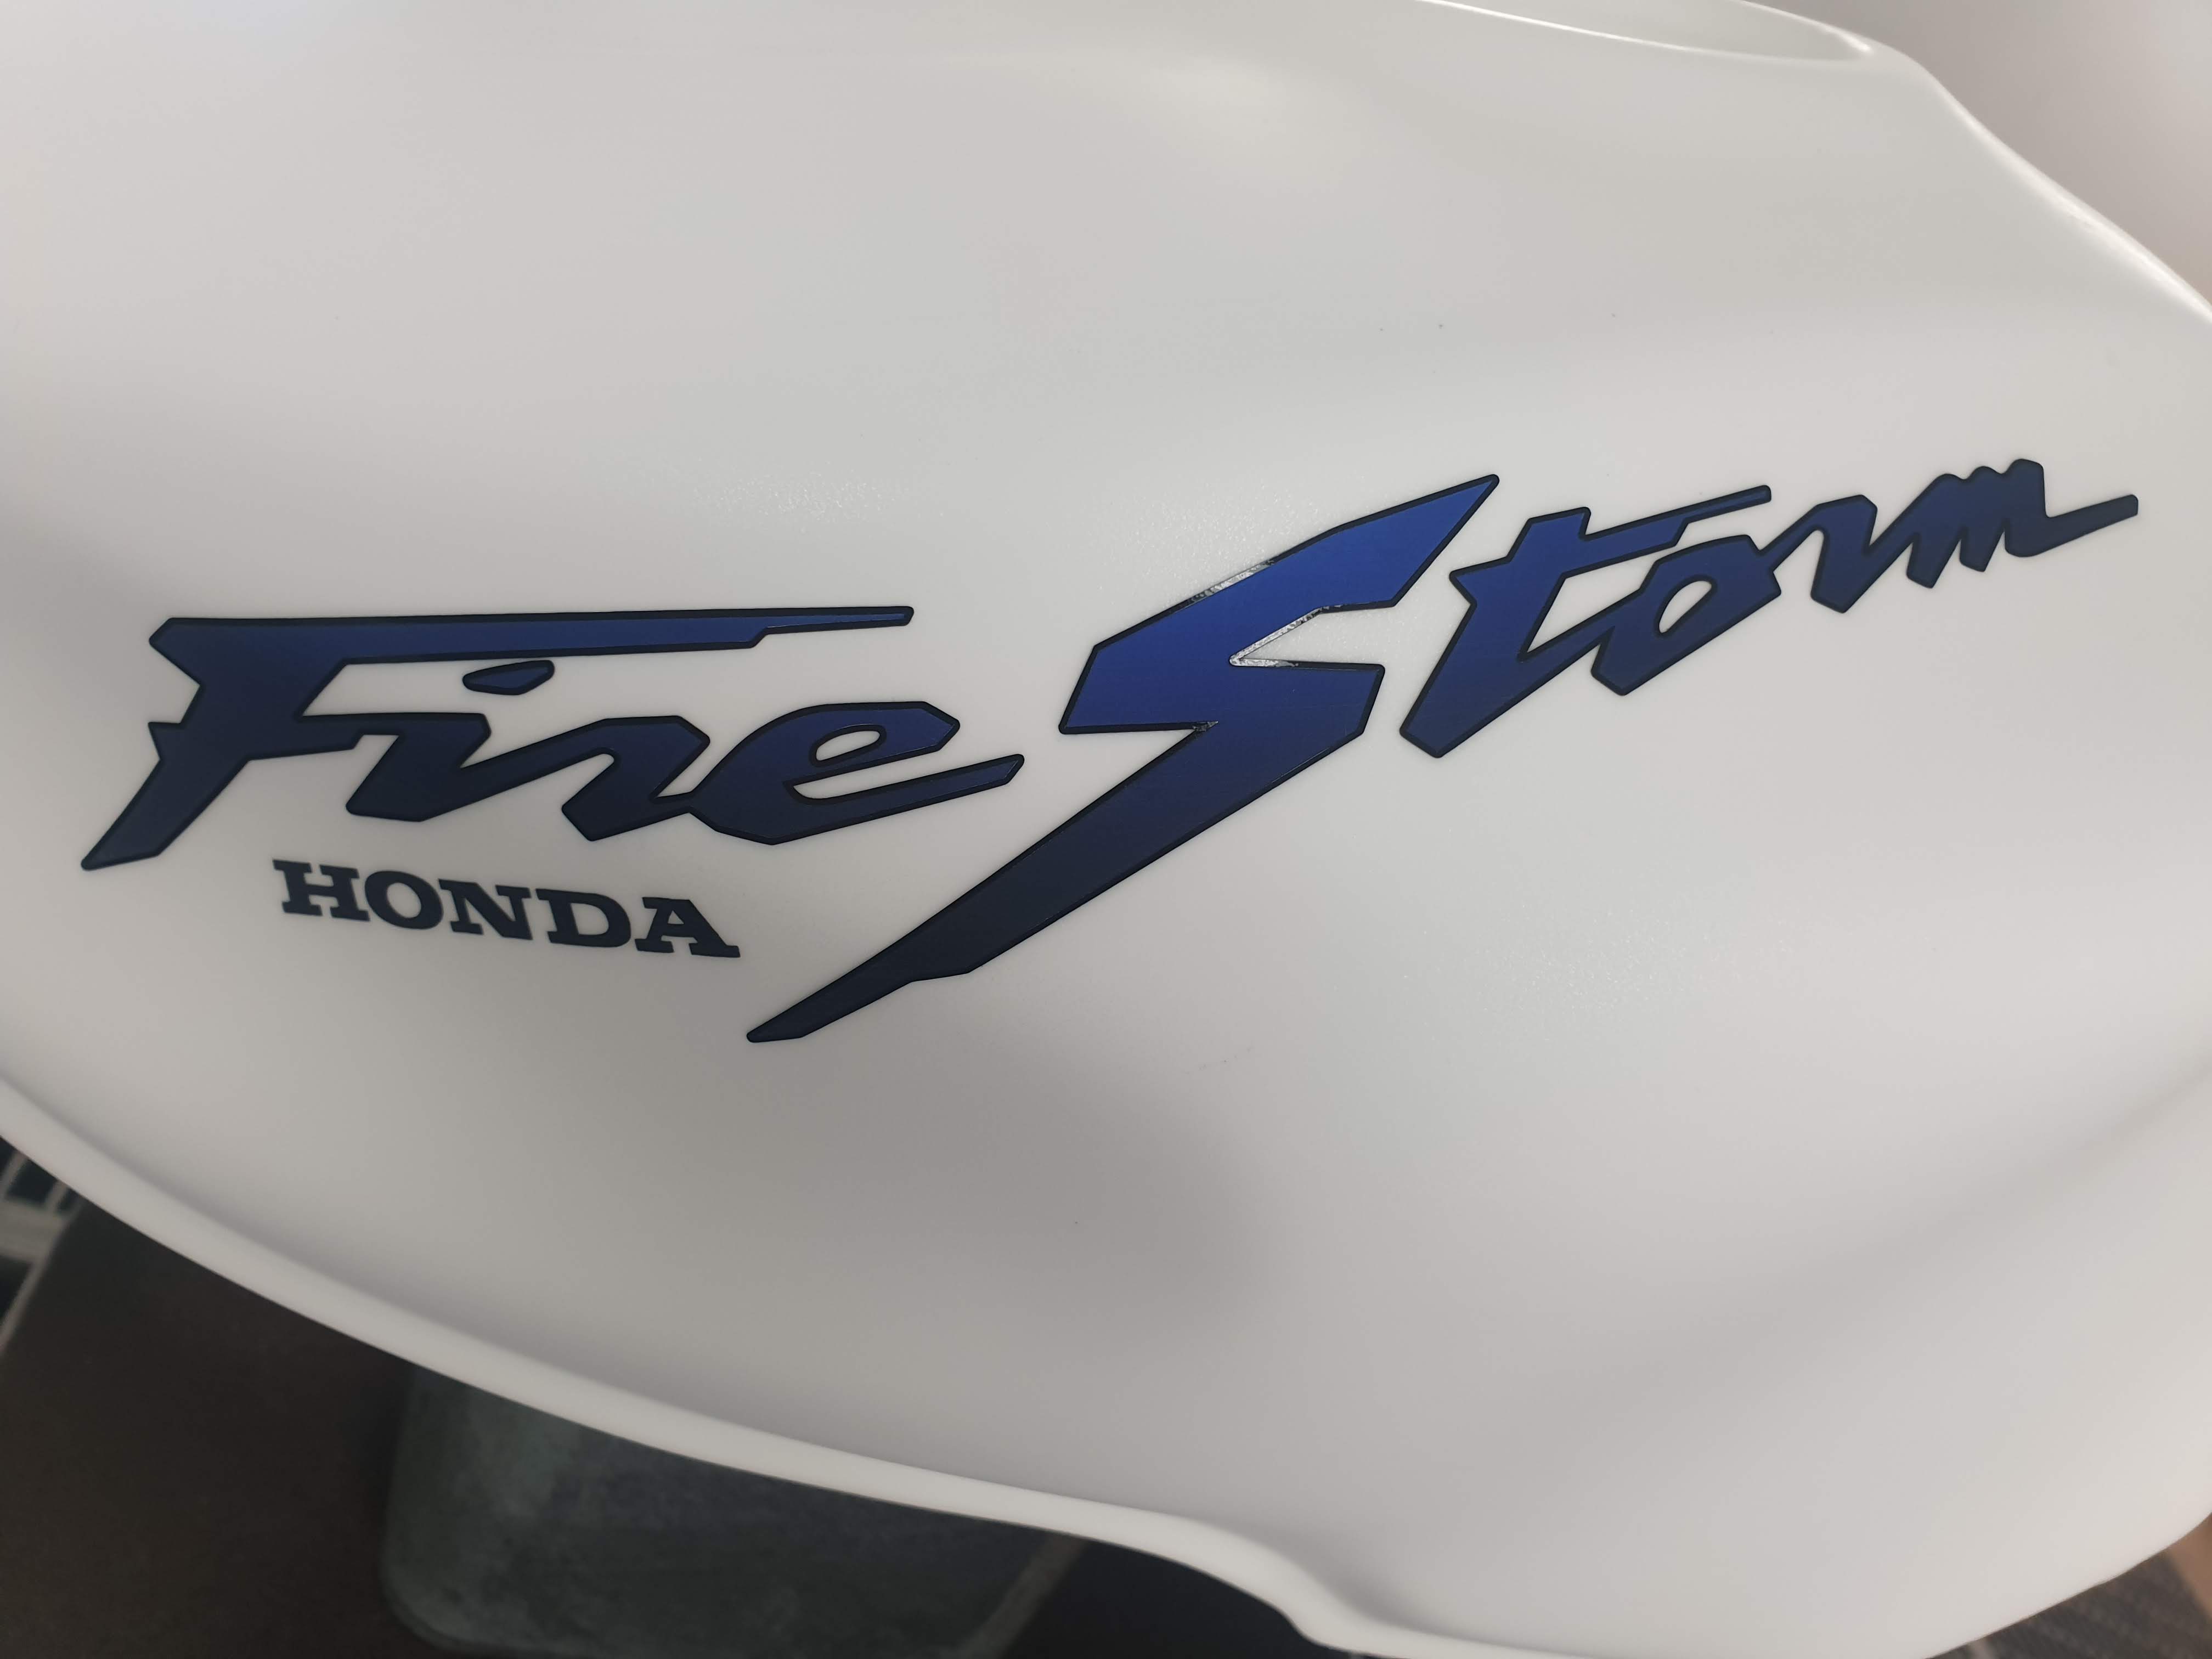 Honda VTR firestorm white pearl blue candy 26